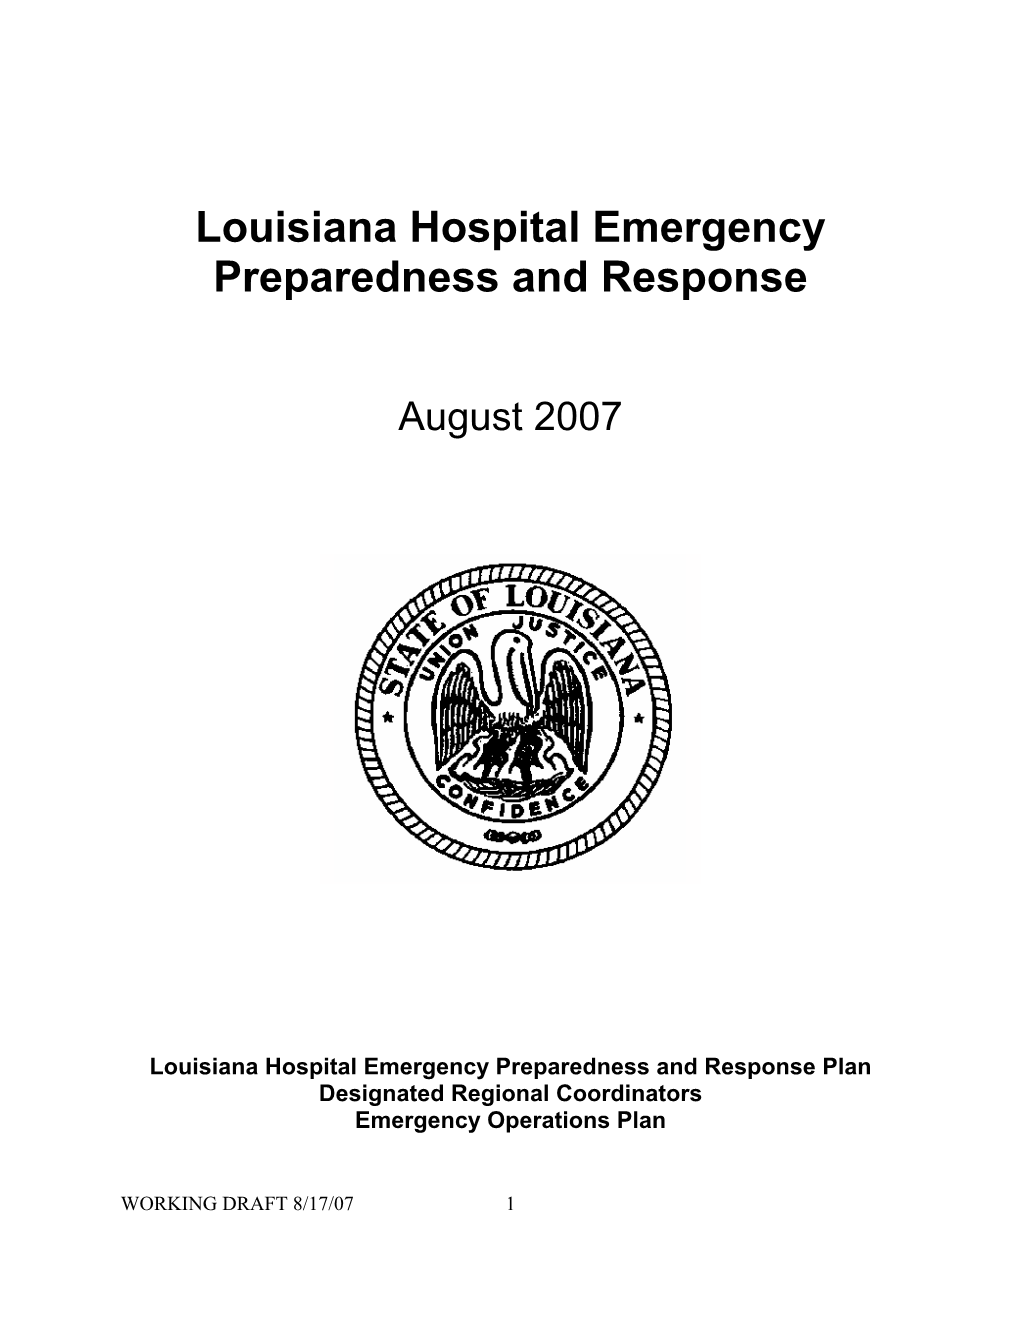 Louisiana Hospital Emergency Preparedness and Response